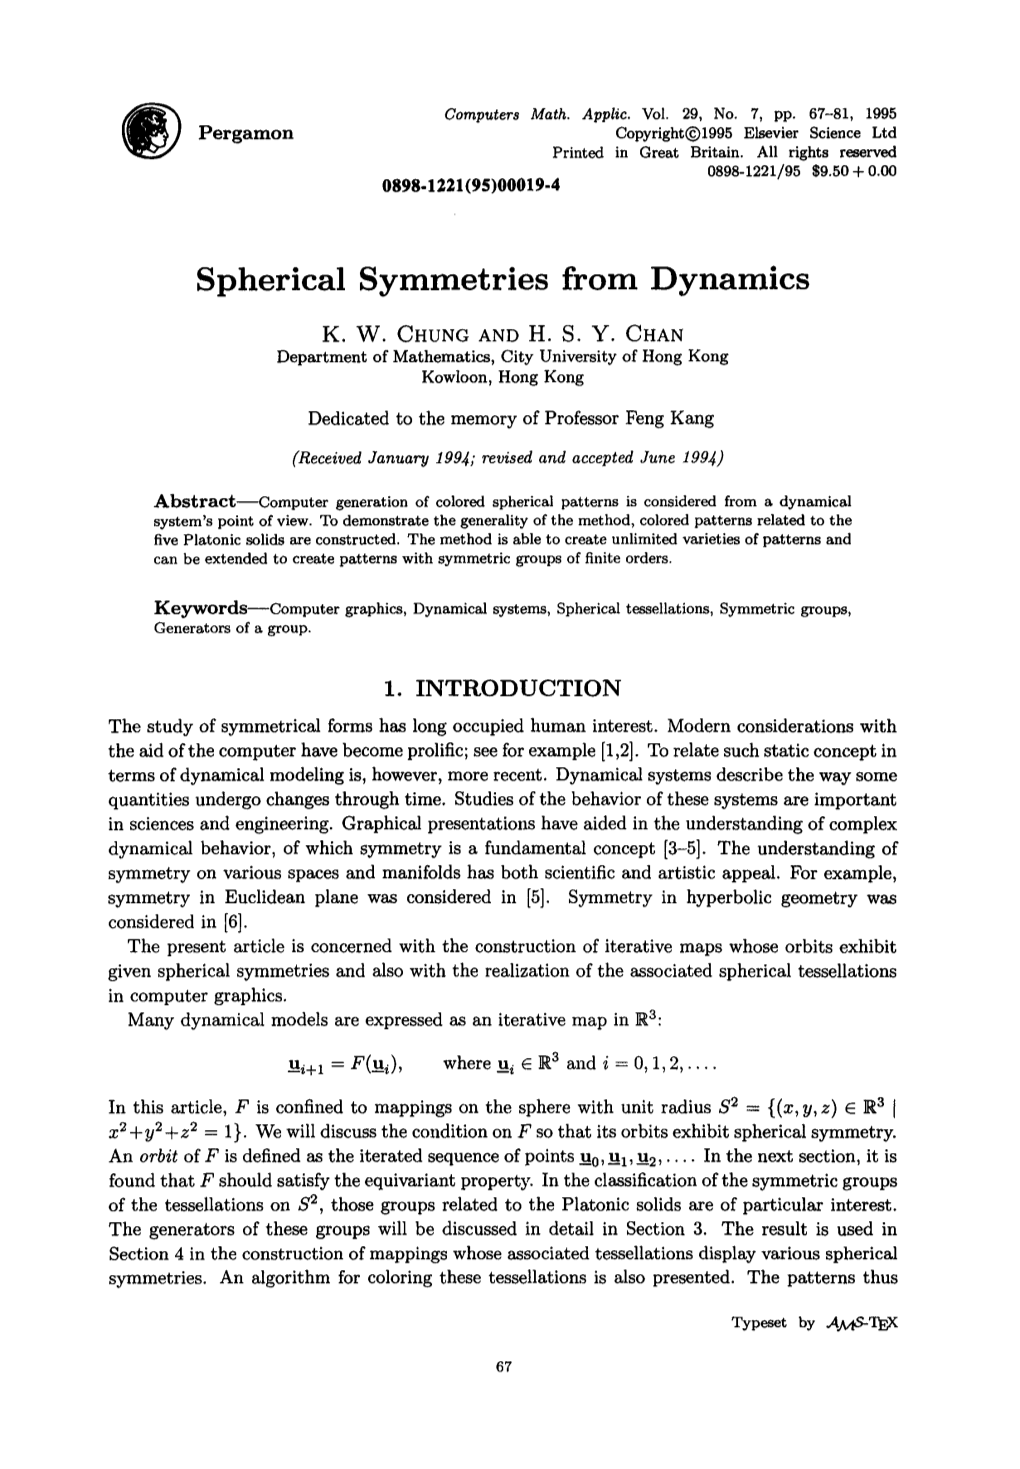 Spherical Symmetries from Dynamics